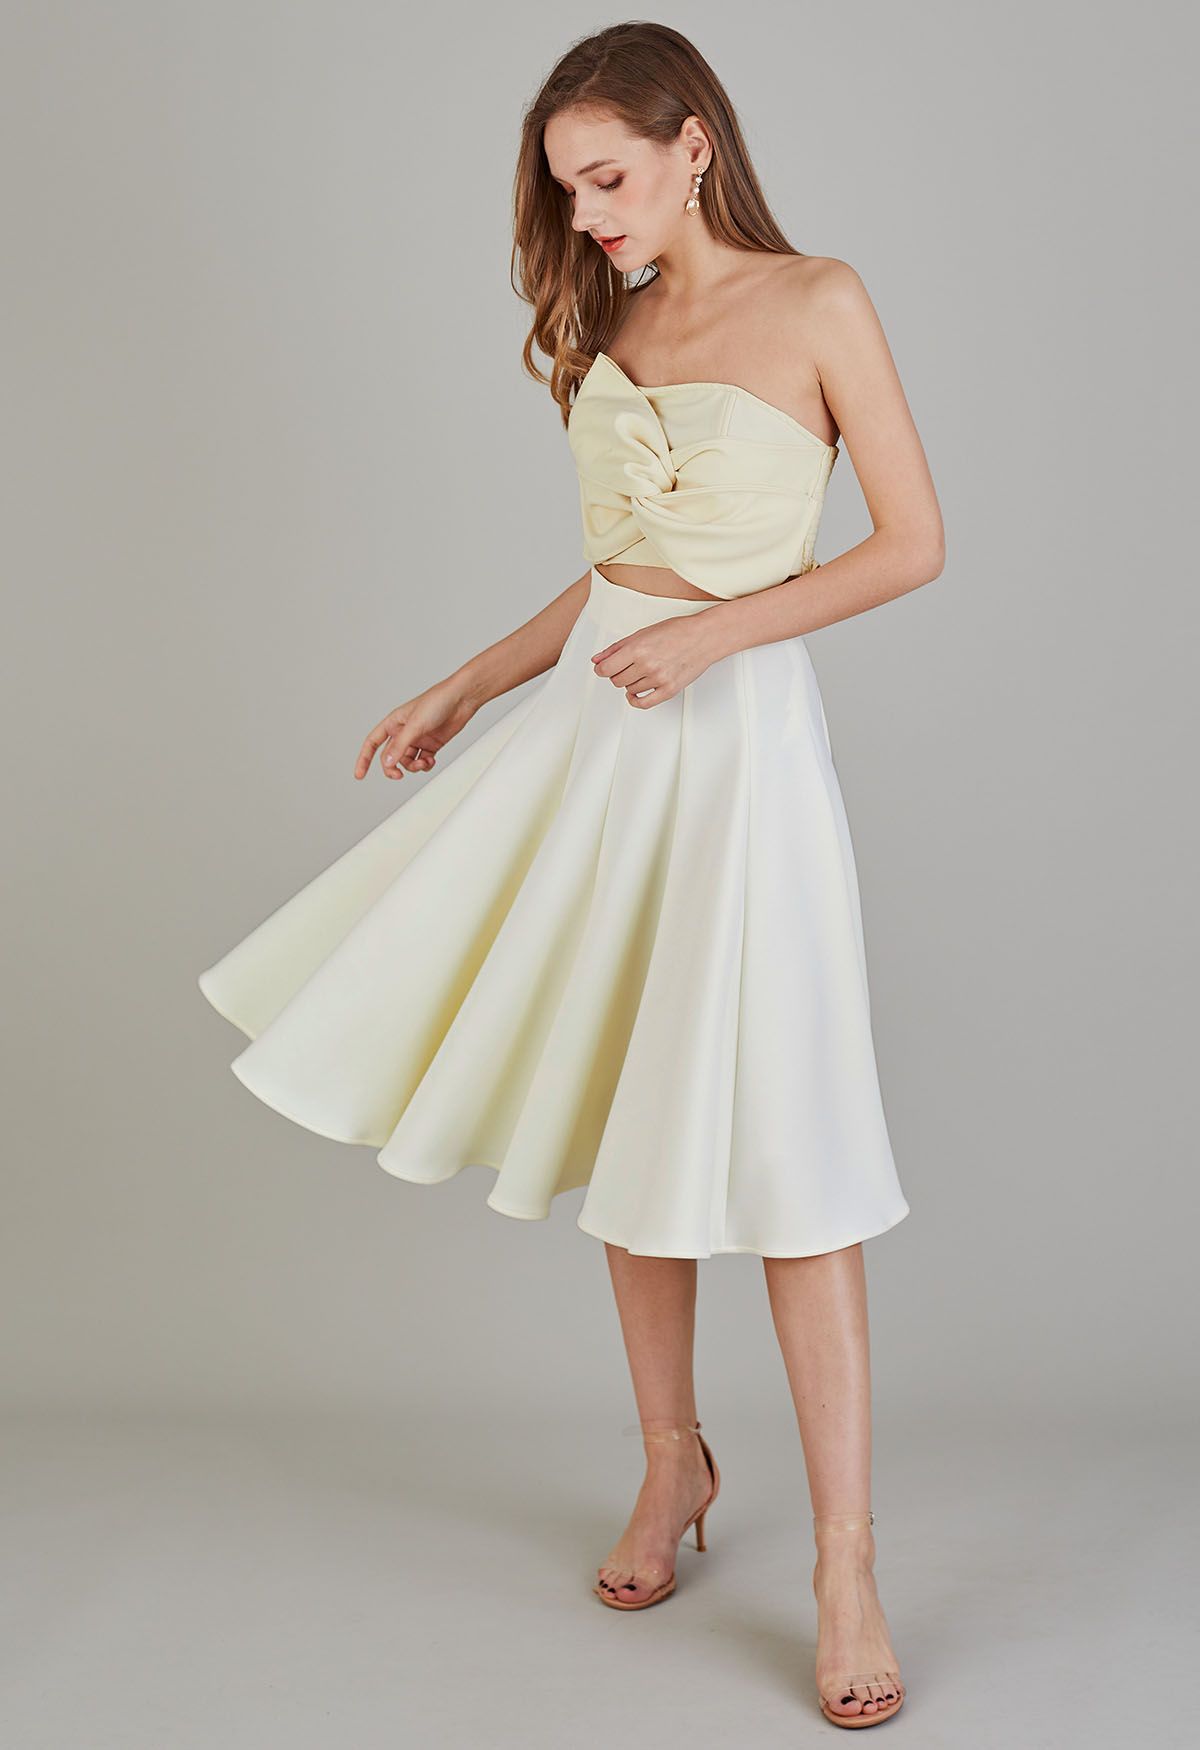 Graceful Flare Silhouette Skirt in Cream